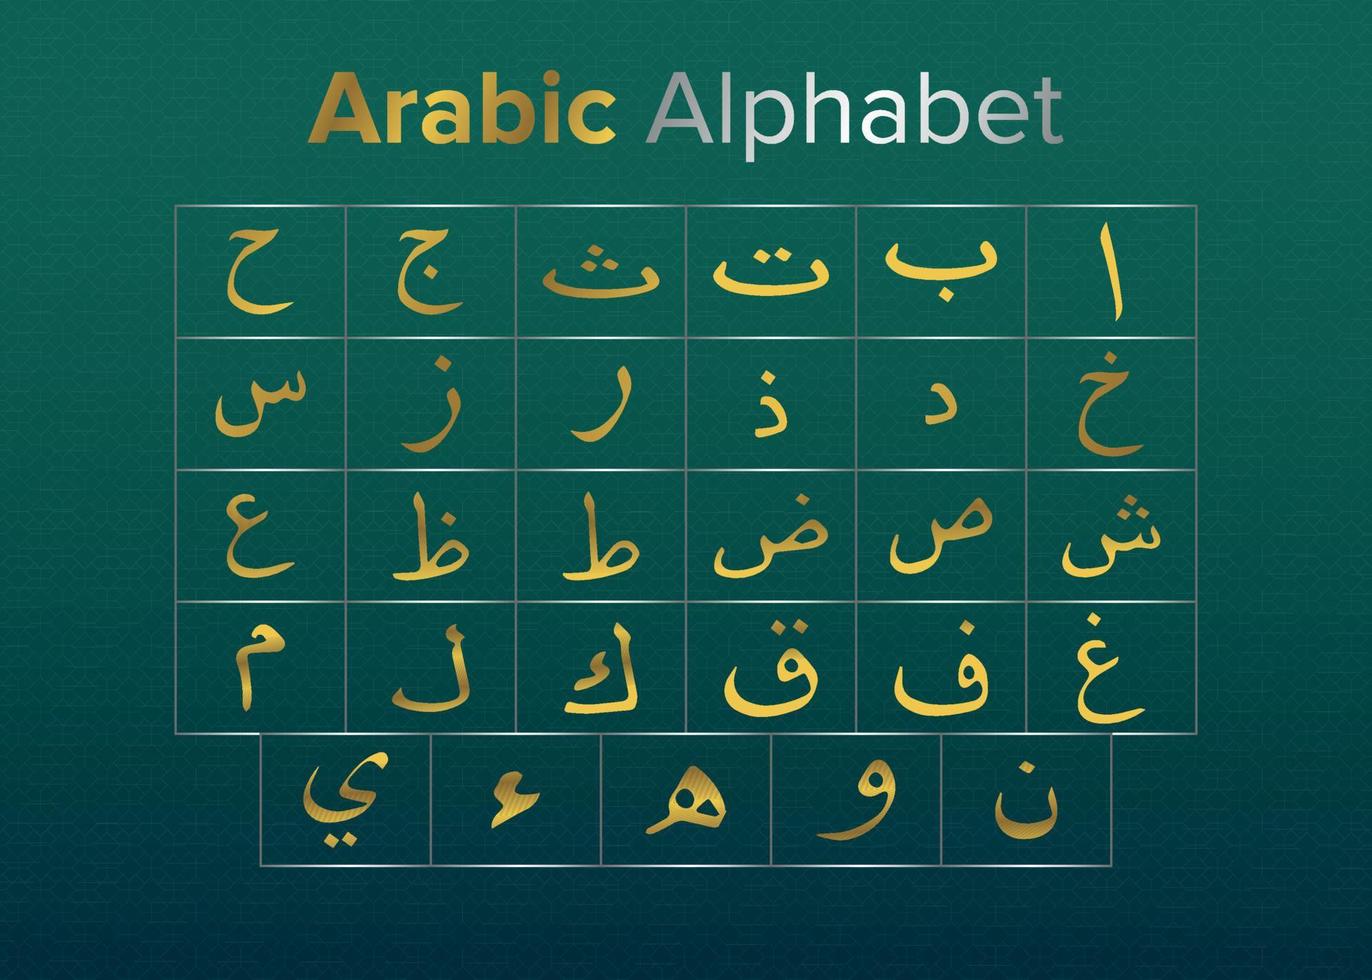 vetor do alfabeto árabe